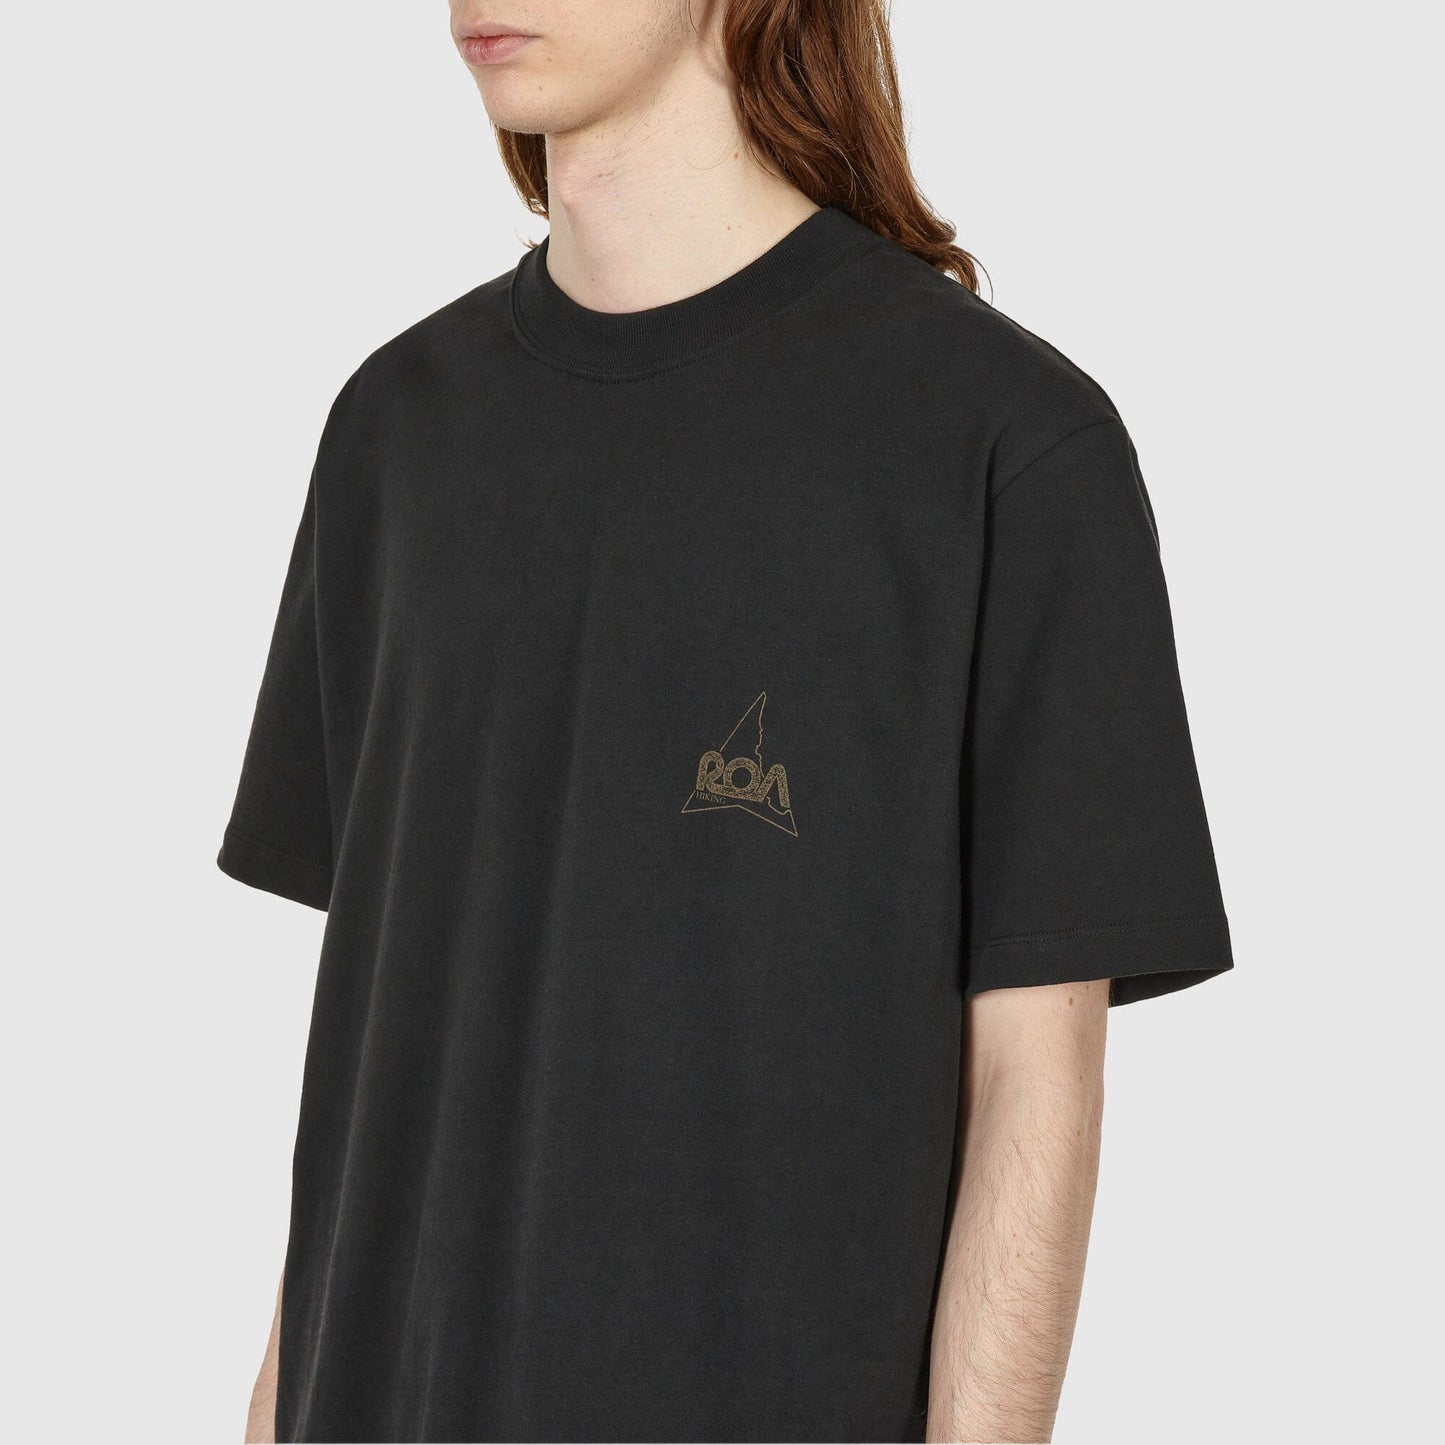 ROA Shortsleeve Graphic T-Shirt - Black T-shirt ROA 